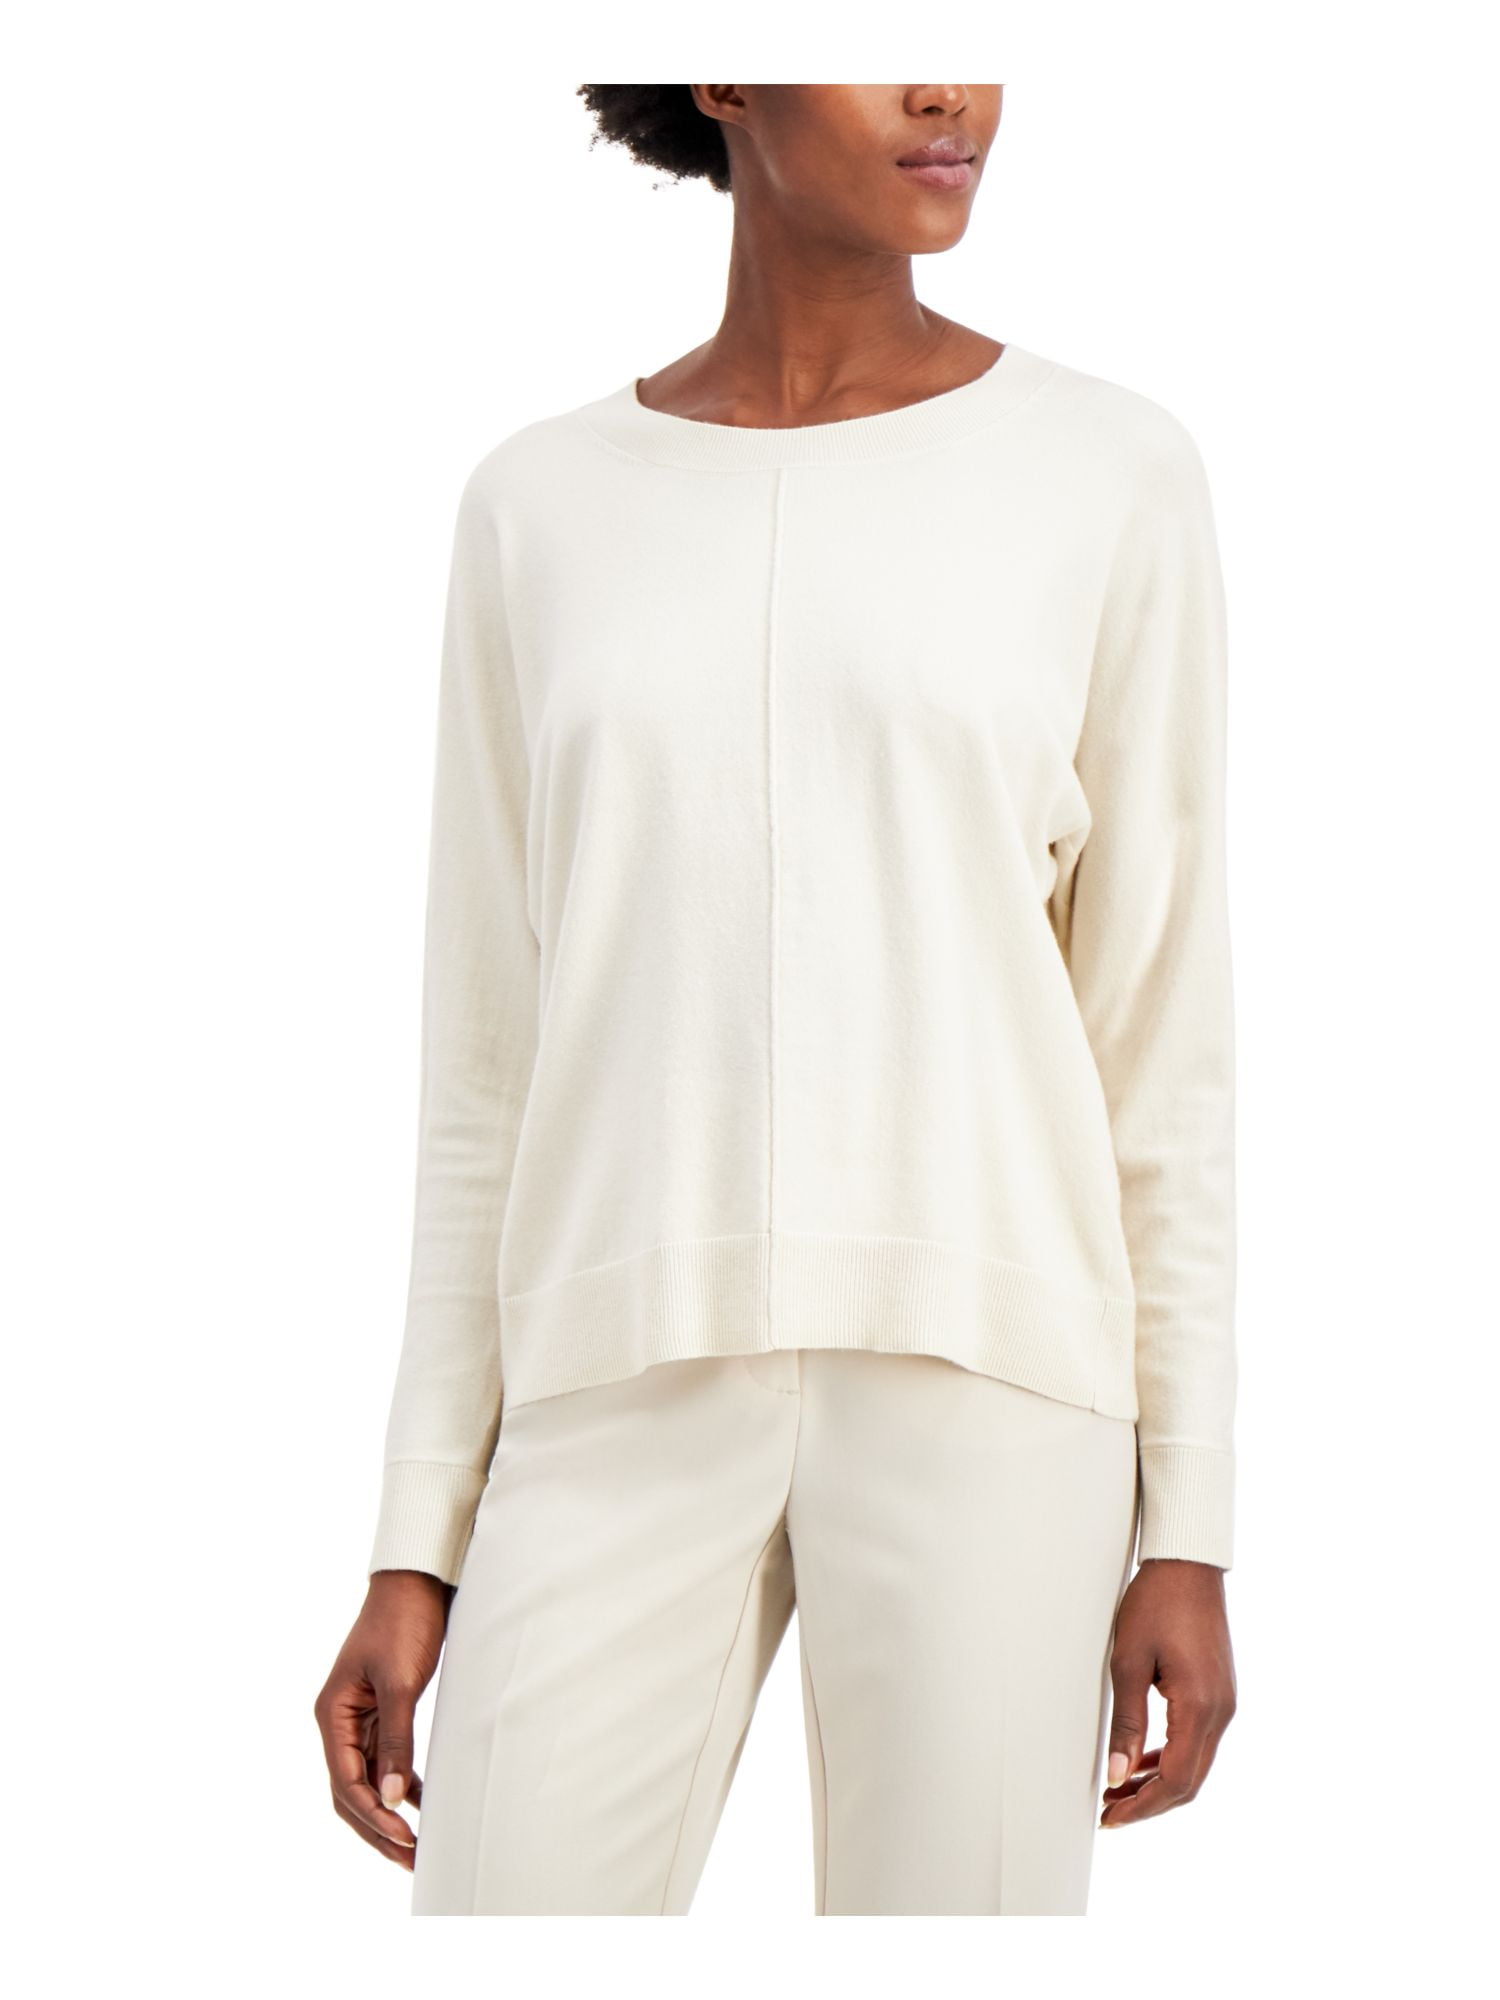 Alfani Women's Sweater White Ivory Size Large L Pullover Mock Neck $79 #201 